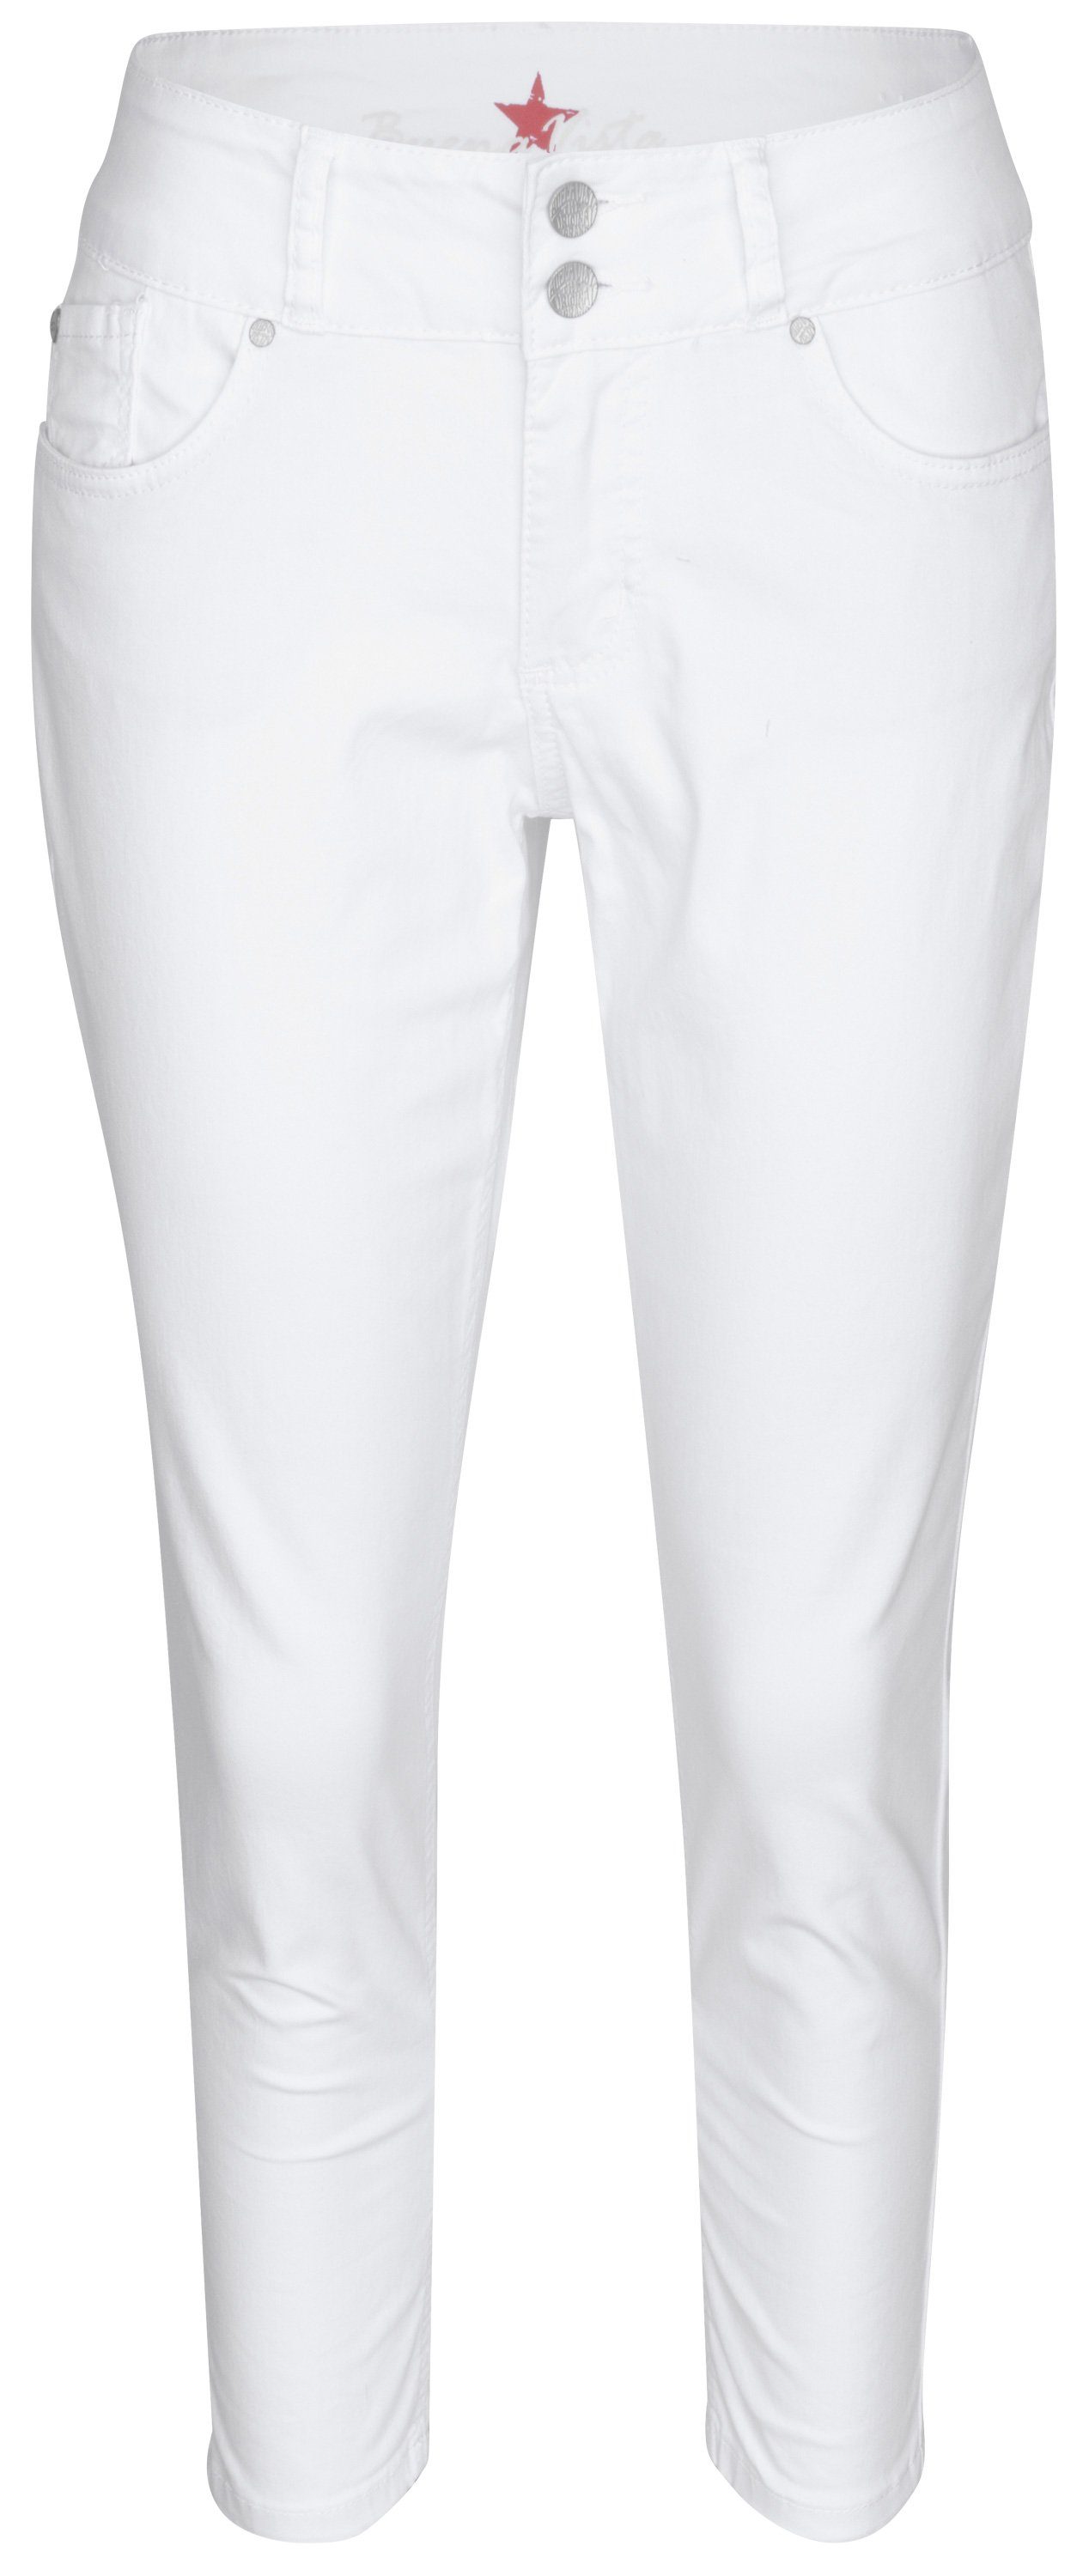 Buena Vista Stretch-Jeans BUENA VISTA TUMMYLESS 7/8 white 888 B5658 502.032 - Stretch Twill